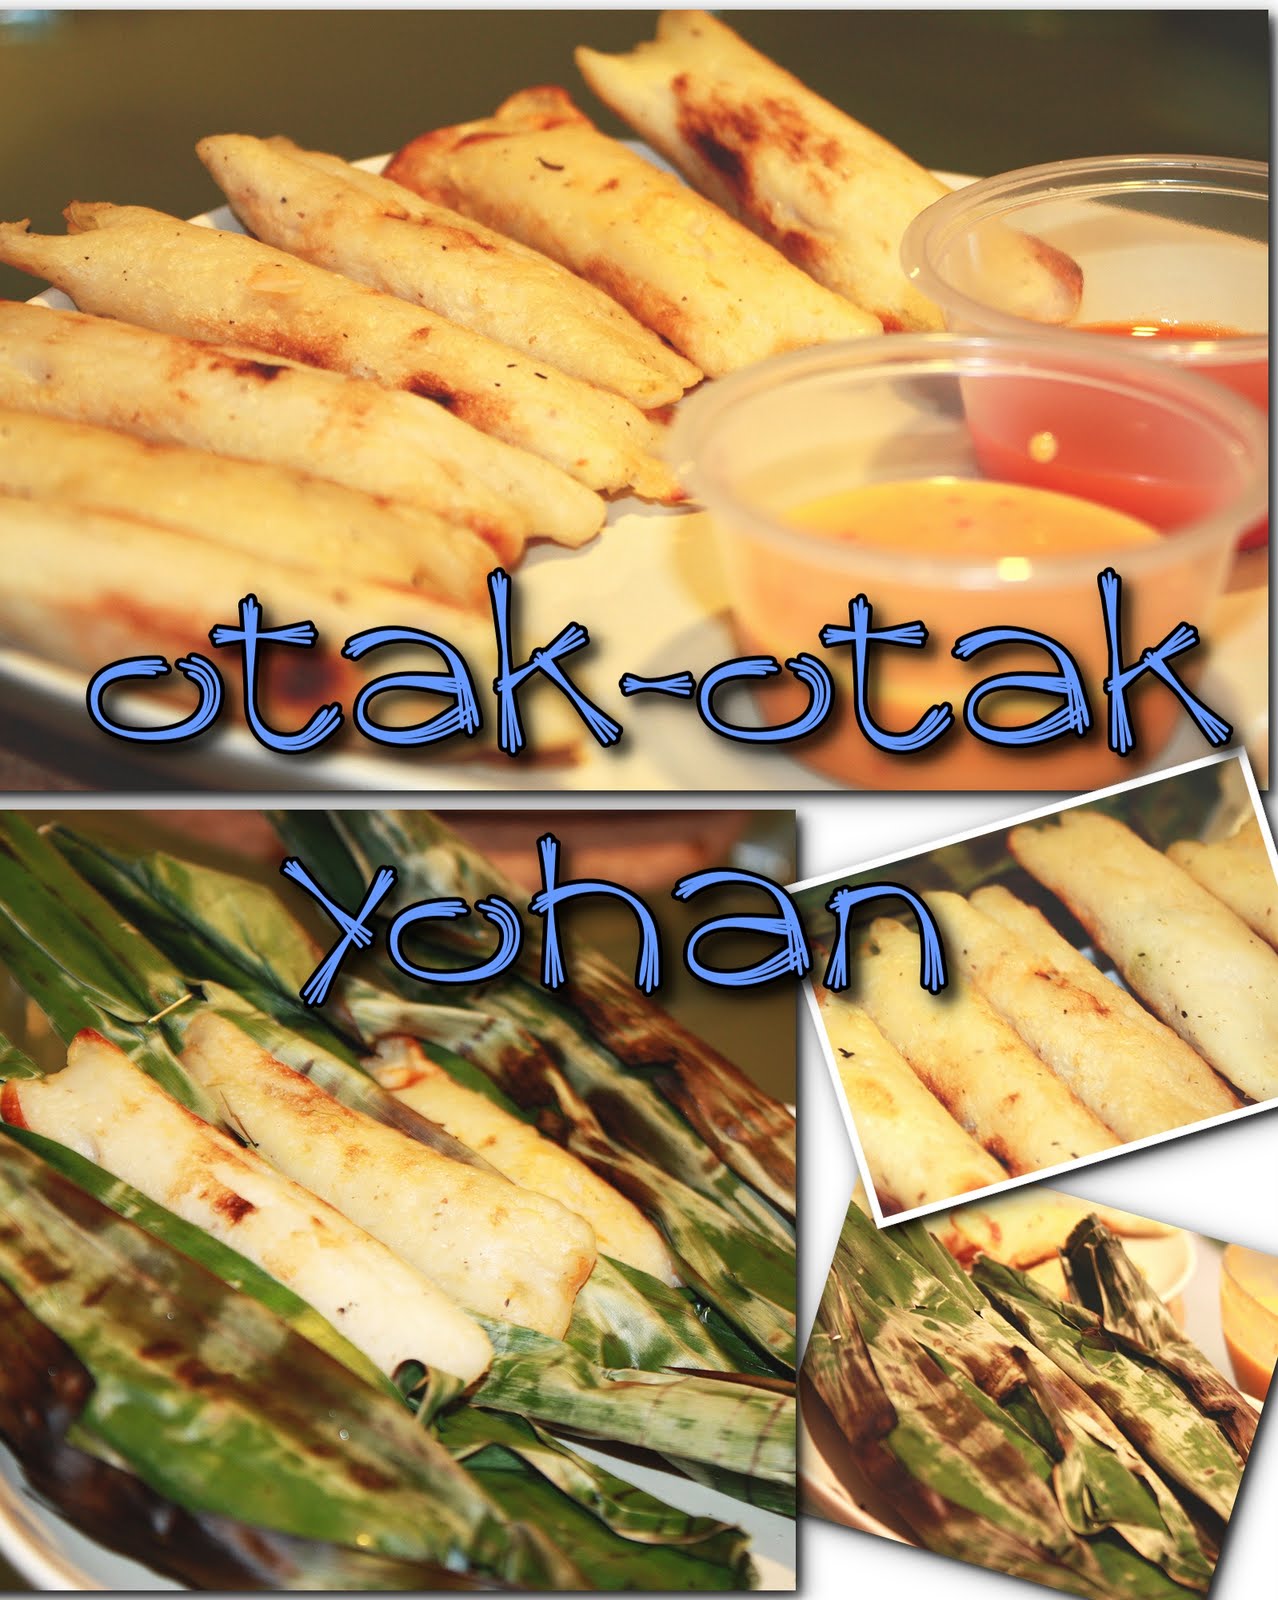 Yummy Pempek and OtakOtak (Indonesia) in Singapore